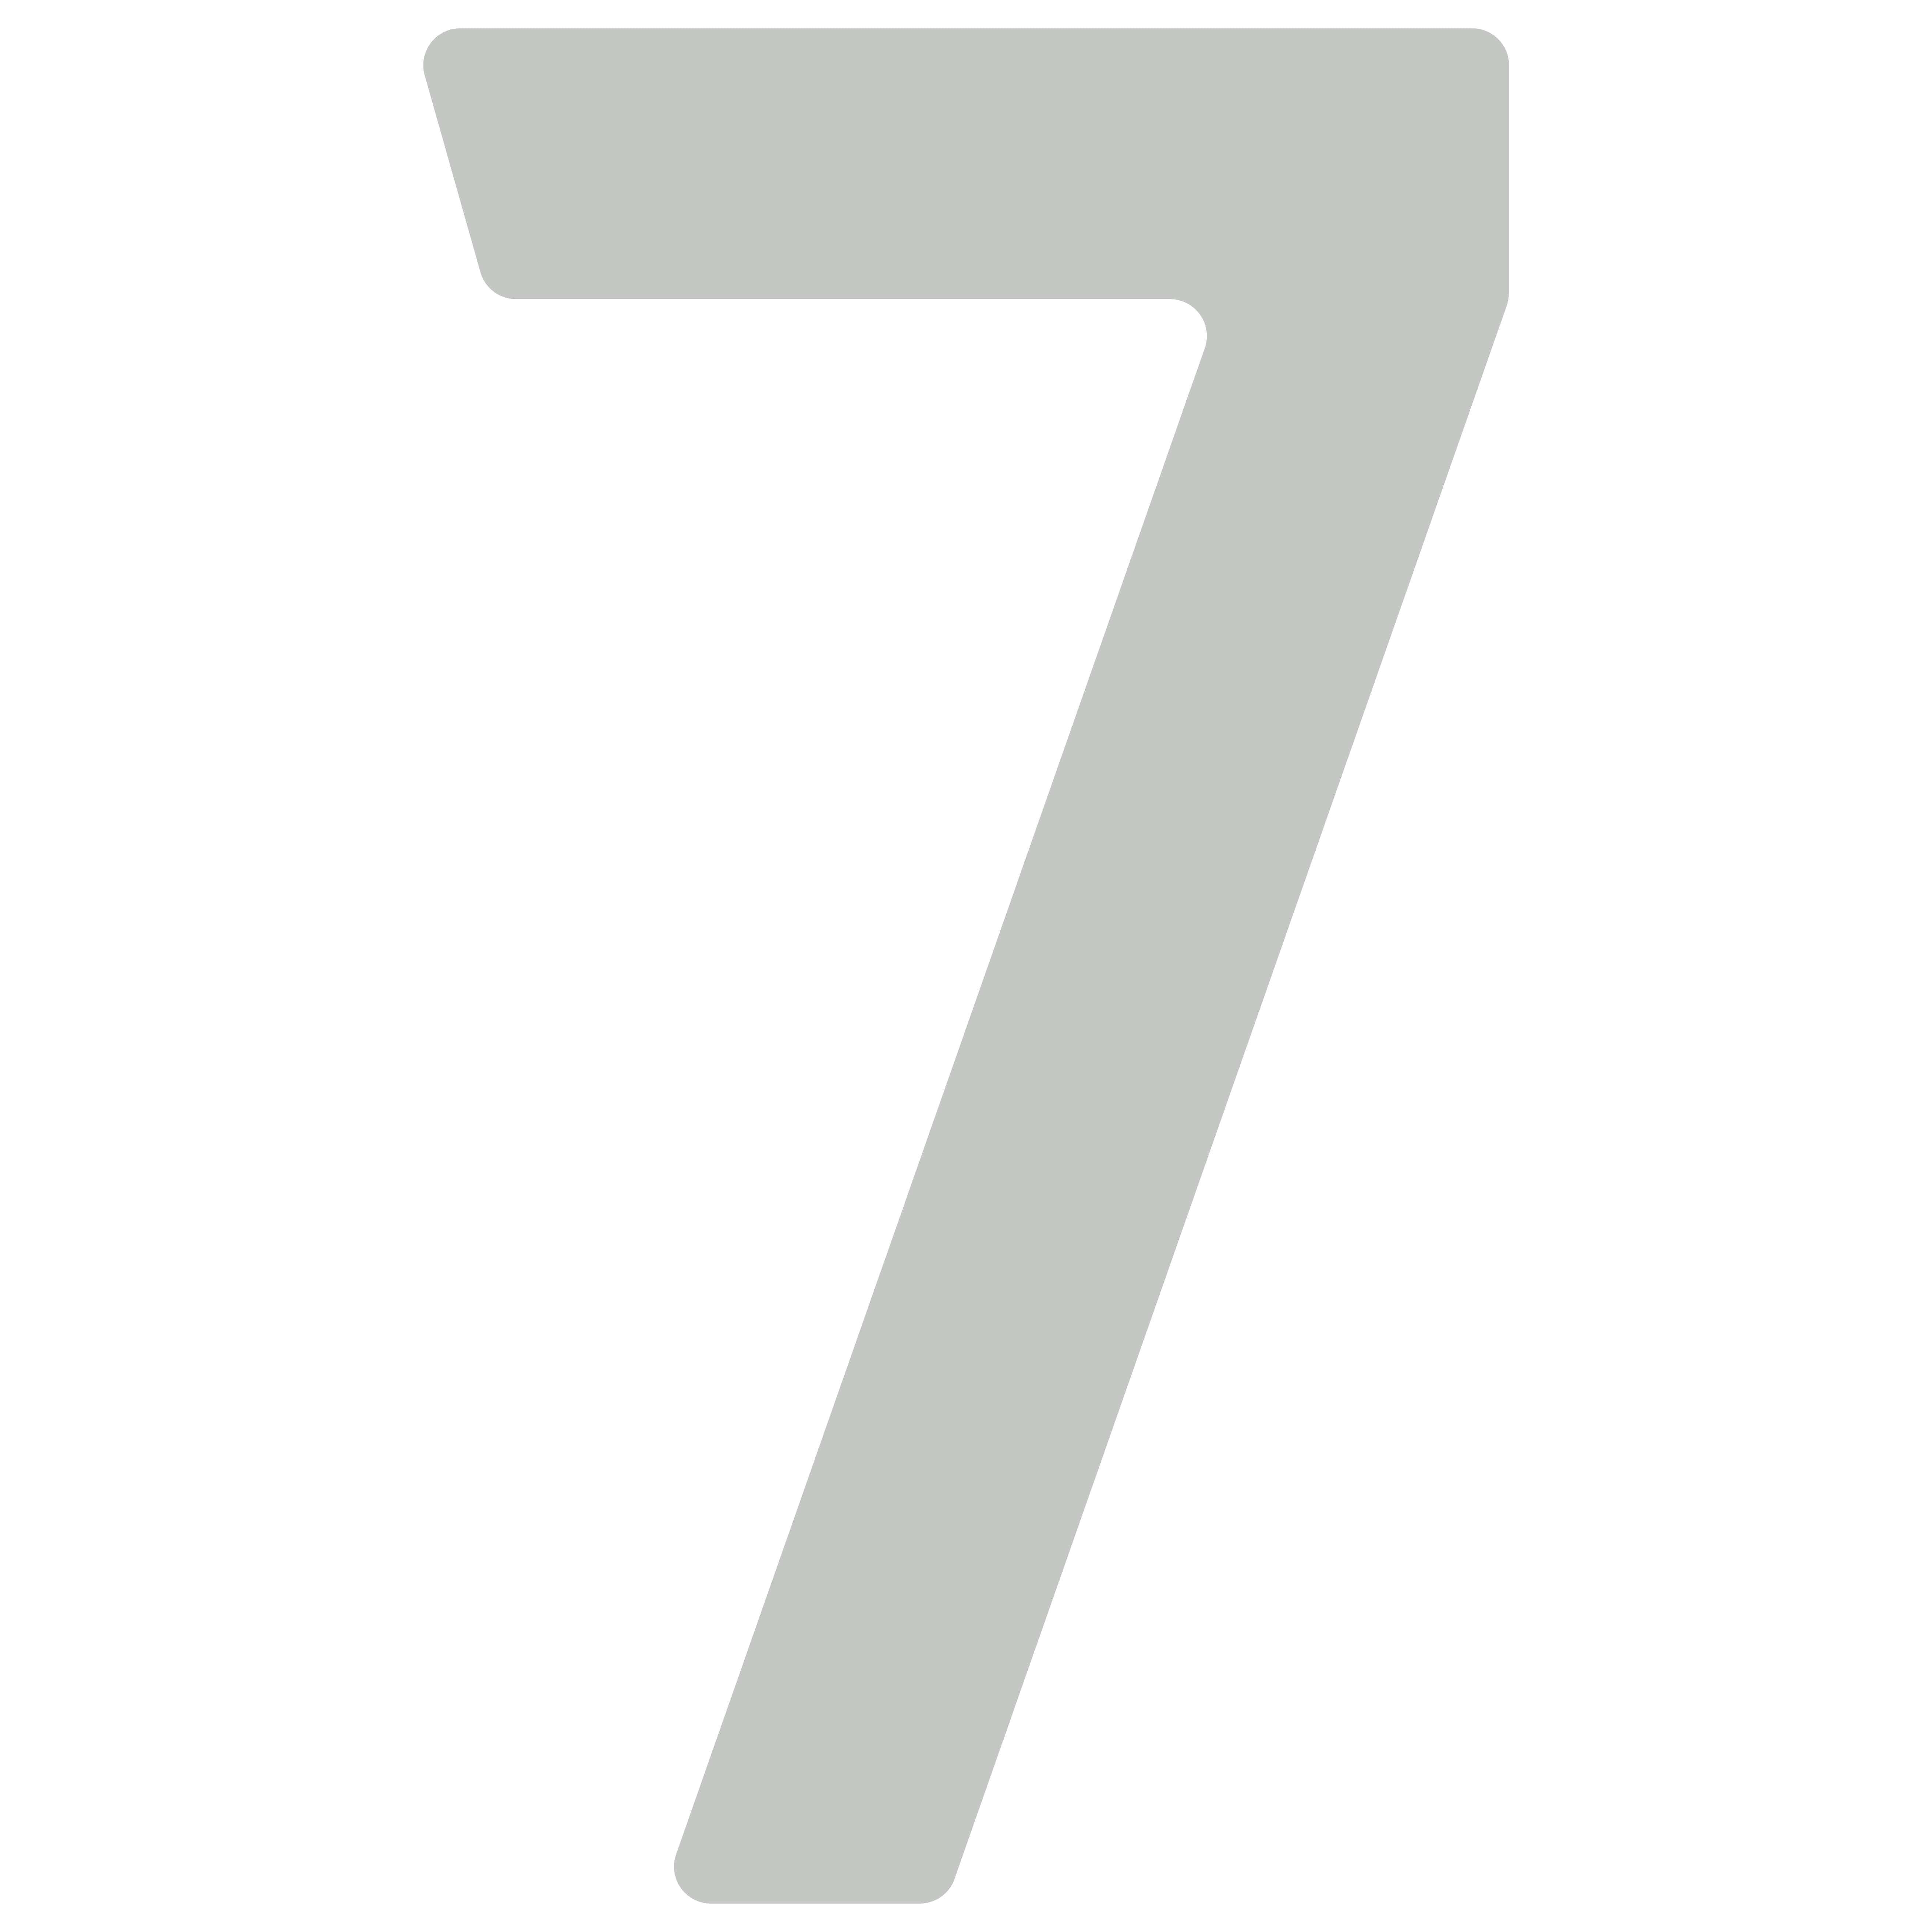 Samoprzylepny numer domu „7” - 76 mm na jasny szary